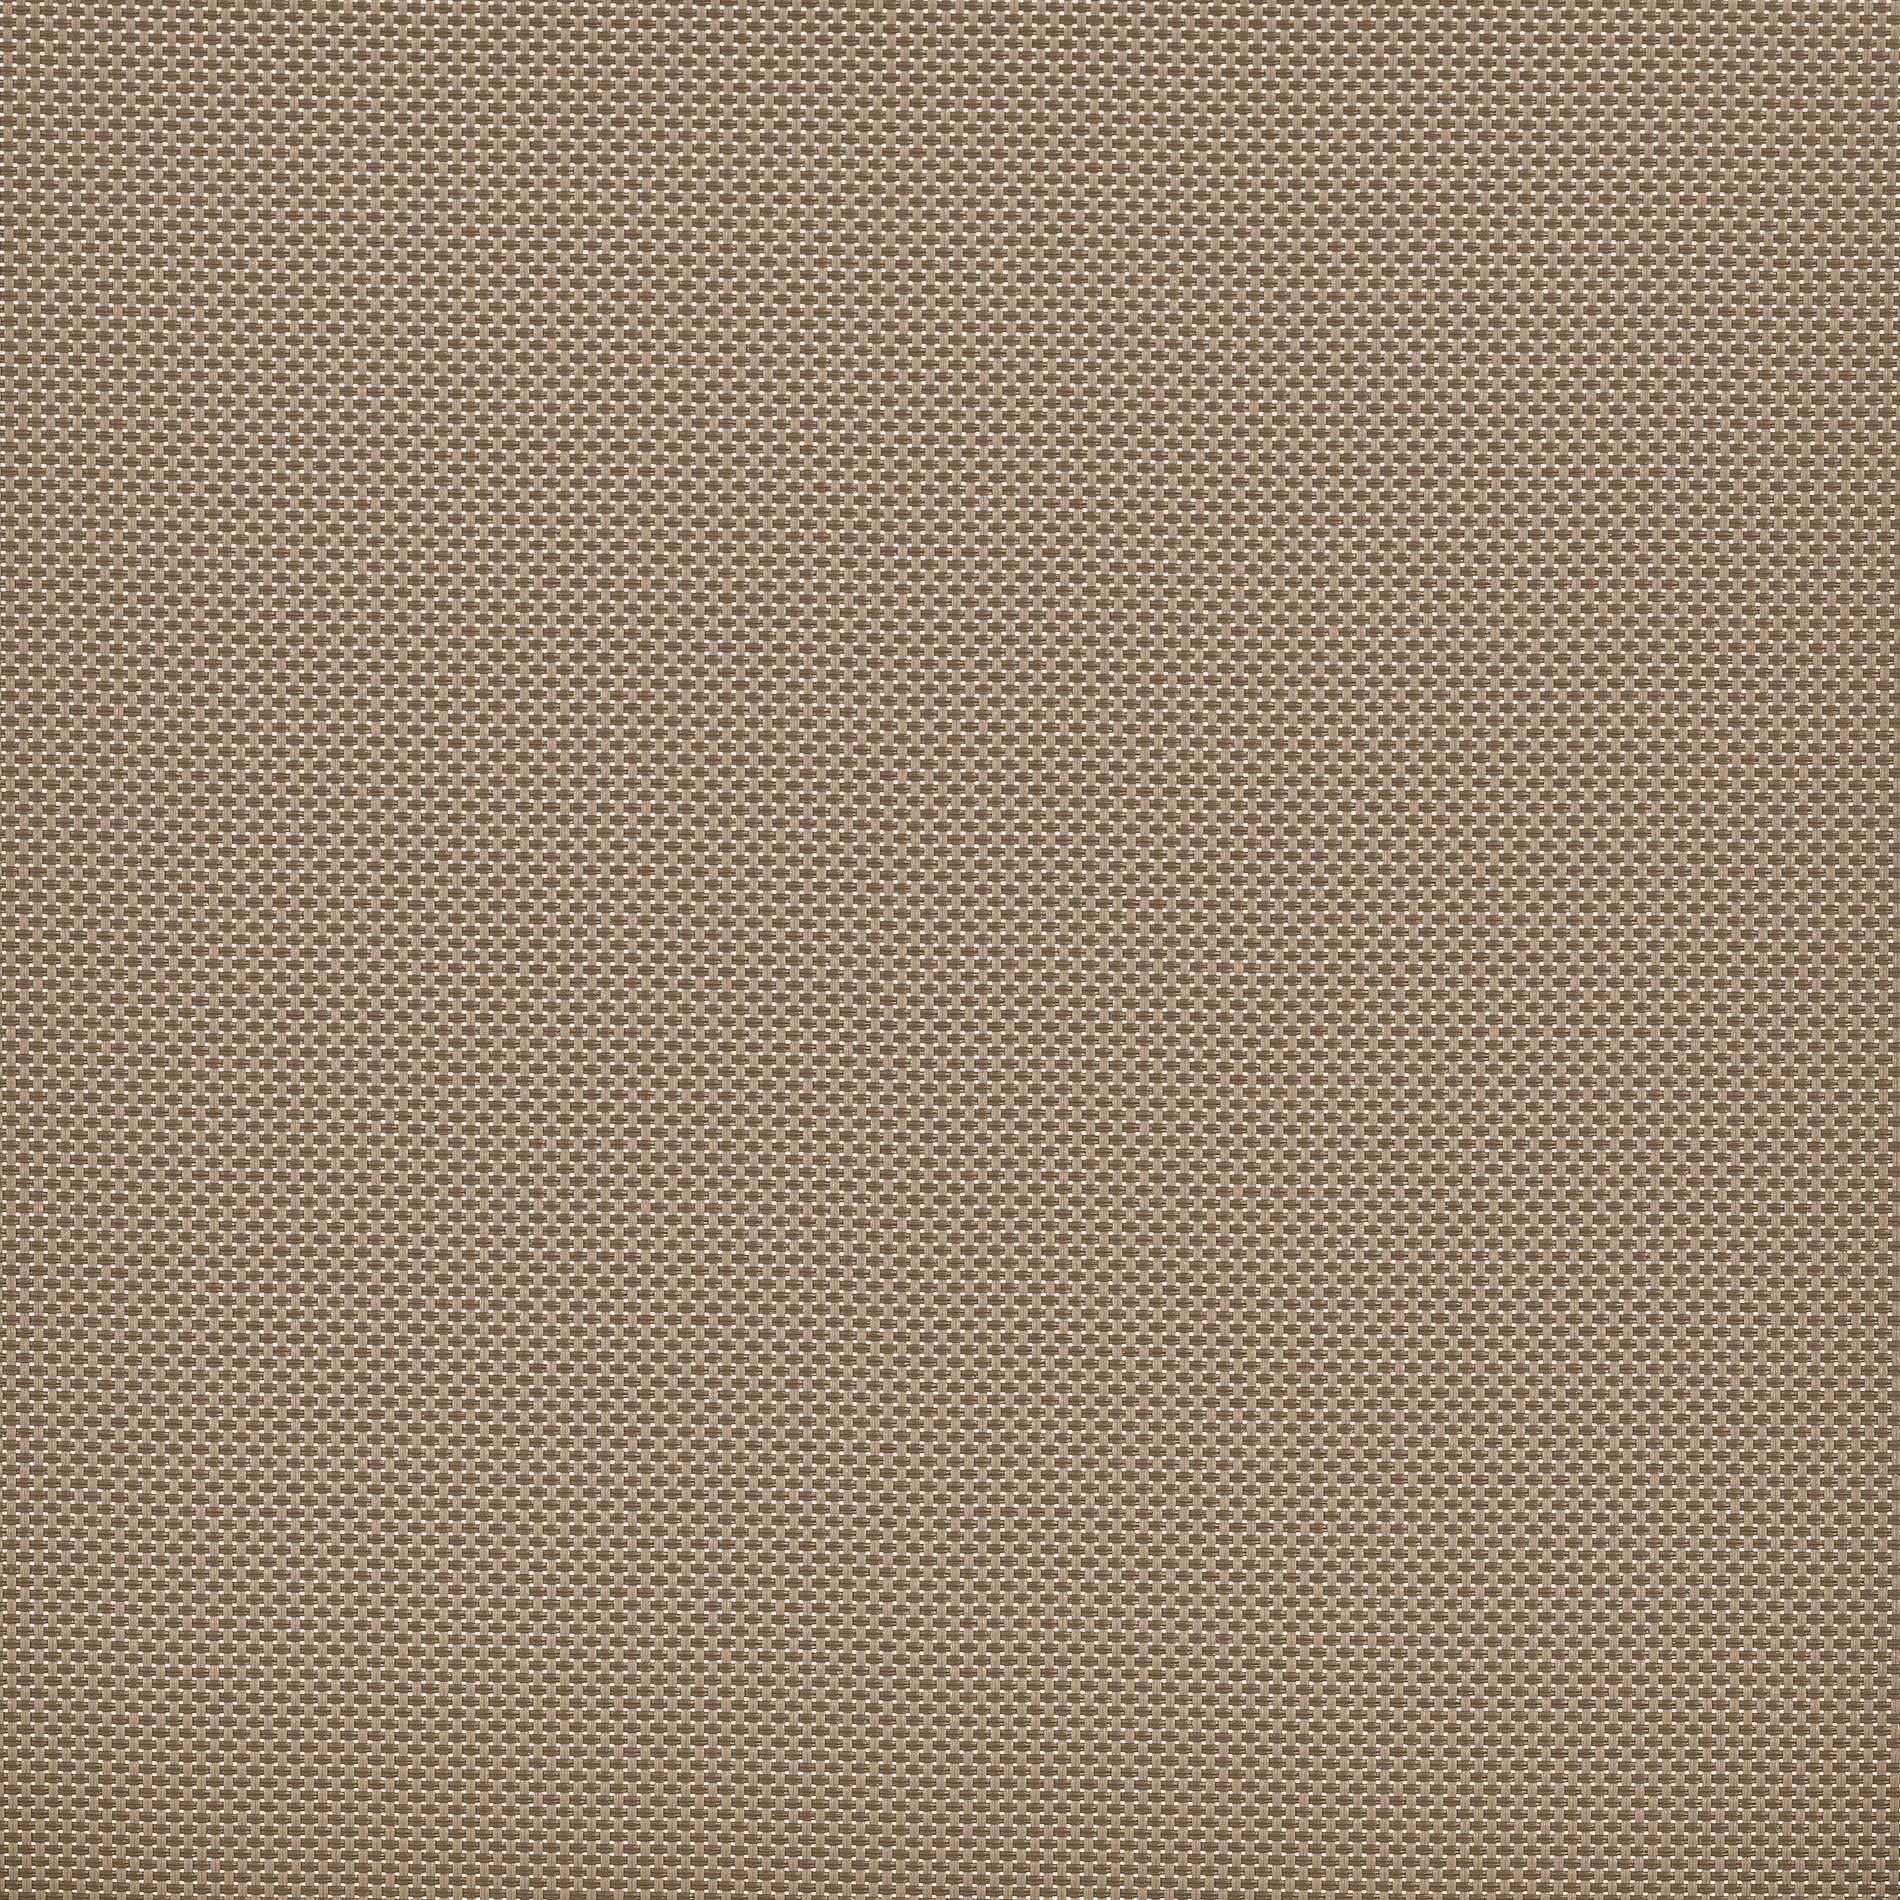 Altex - Fabric - NATTÉ 3% - Sable/Wood - 910988